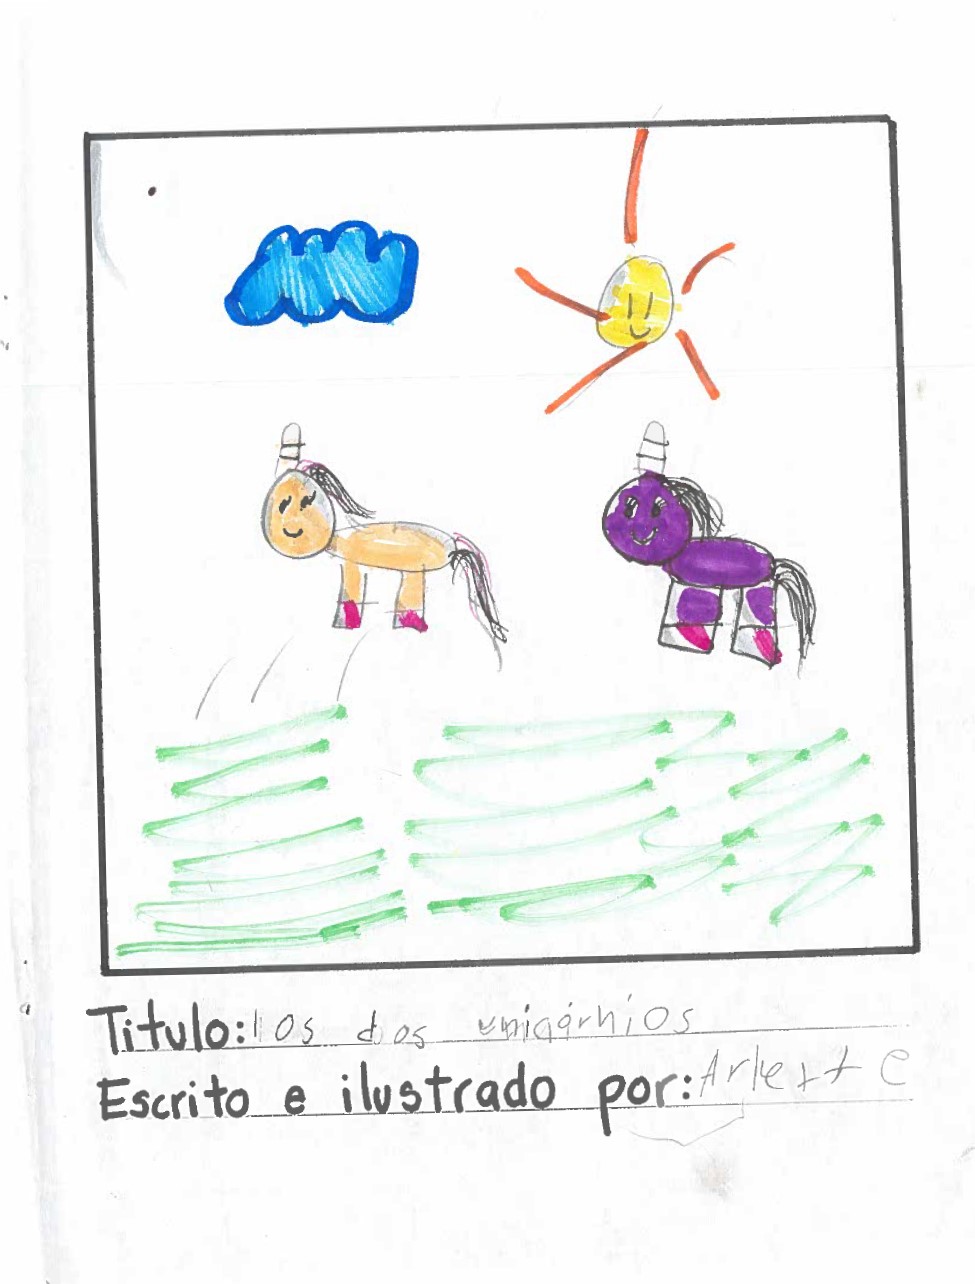 Los dos unicornios by Arlette G.